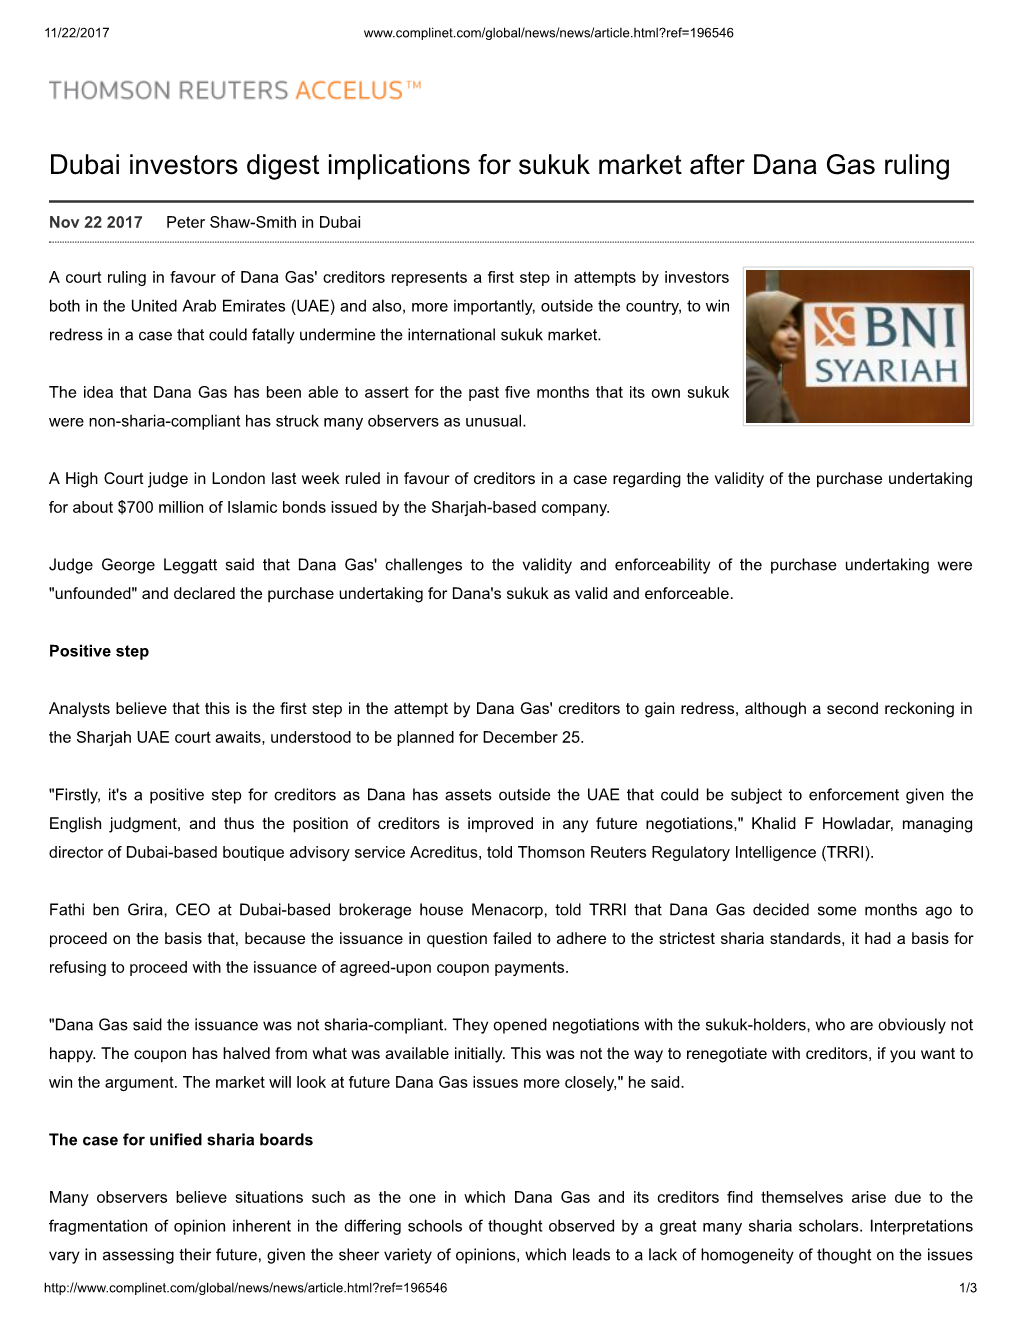 Dubai Investors Digest Implications for Sukuk Market After Dana Gas Ruling